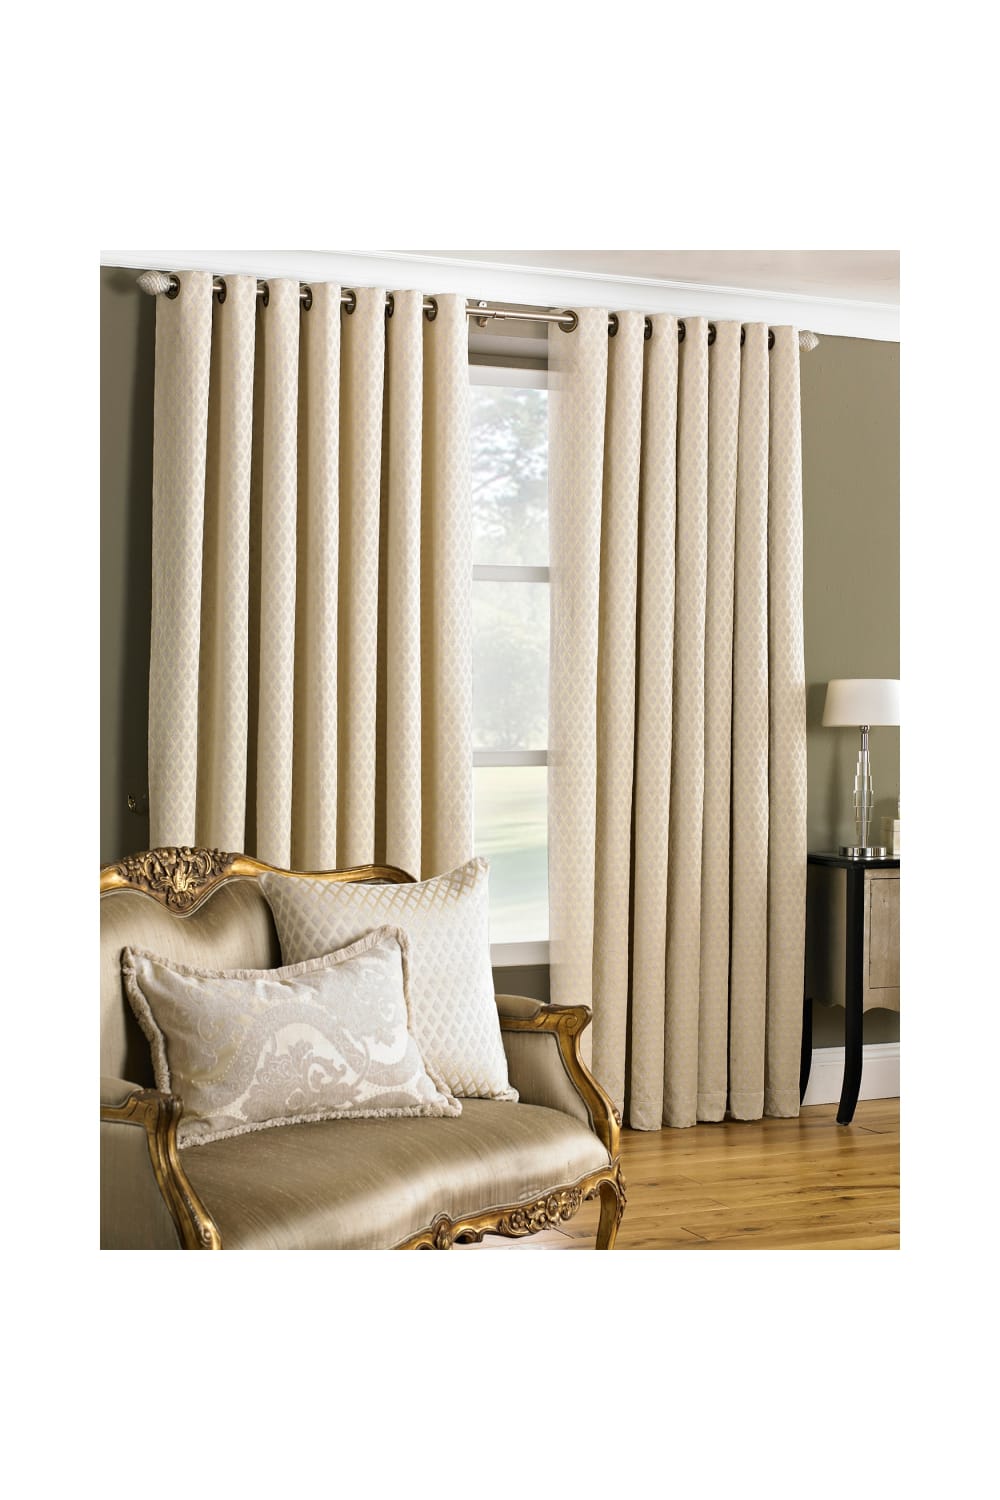 Riva Home Devere Ringtop Curtains (Cream) (66 x 90 inch)